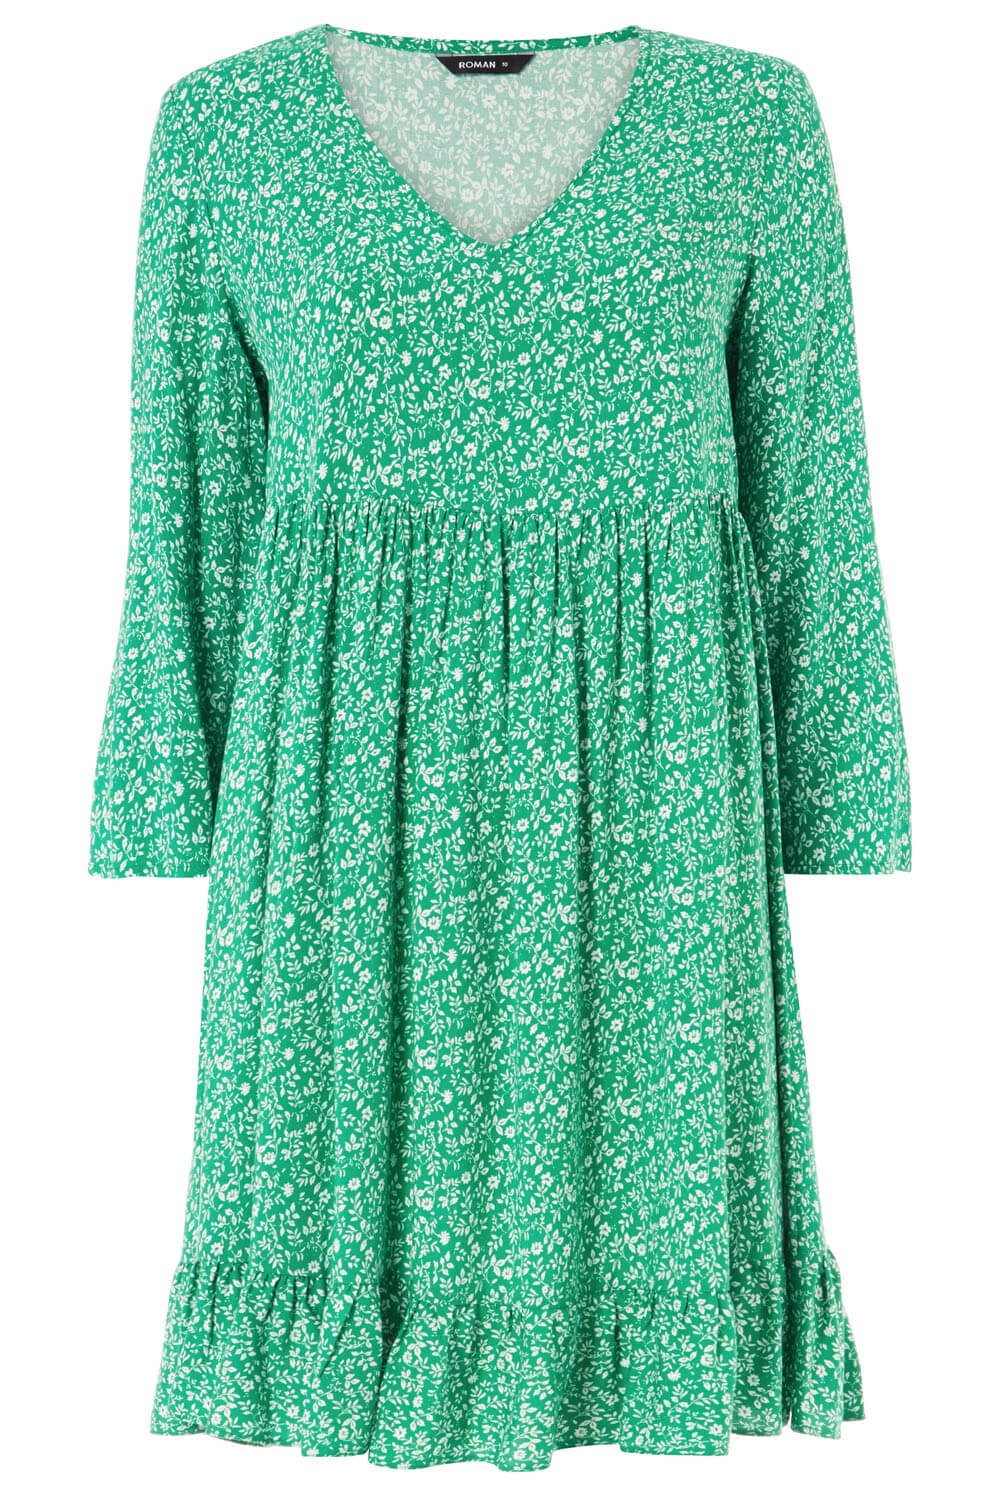 Green Floral Print Frill Hem Smock Dress, Image 4 of 4